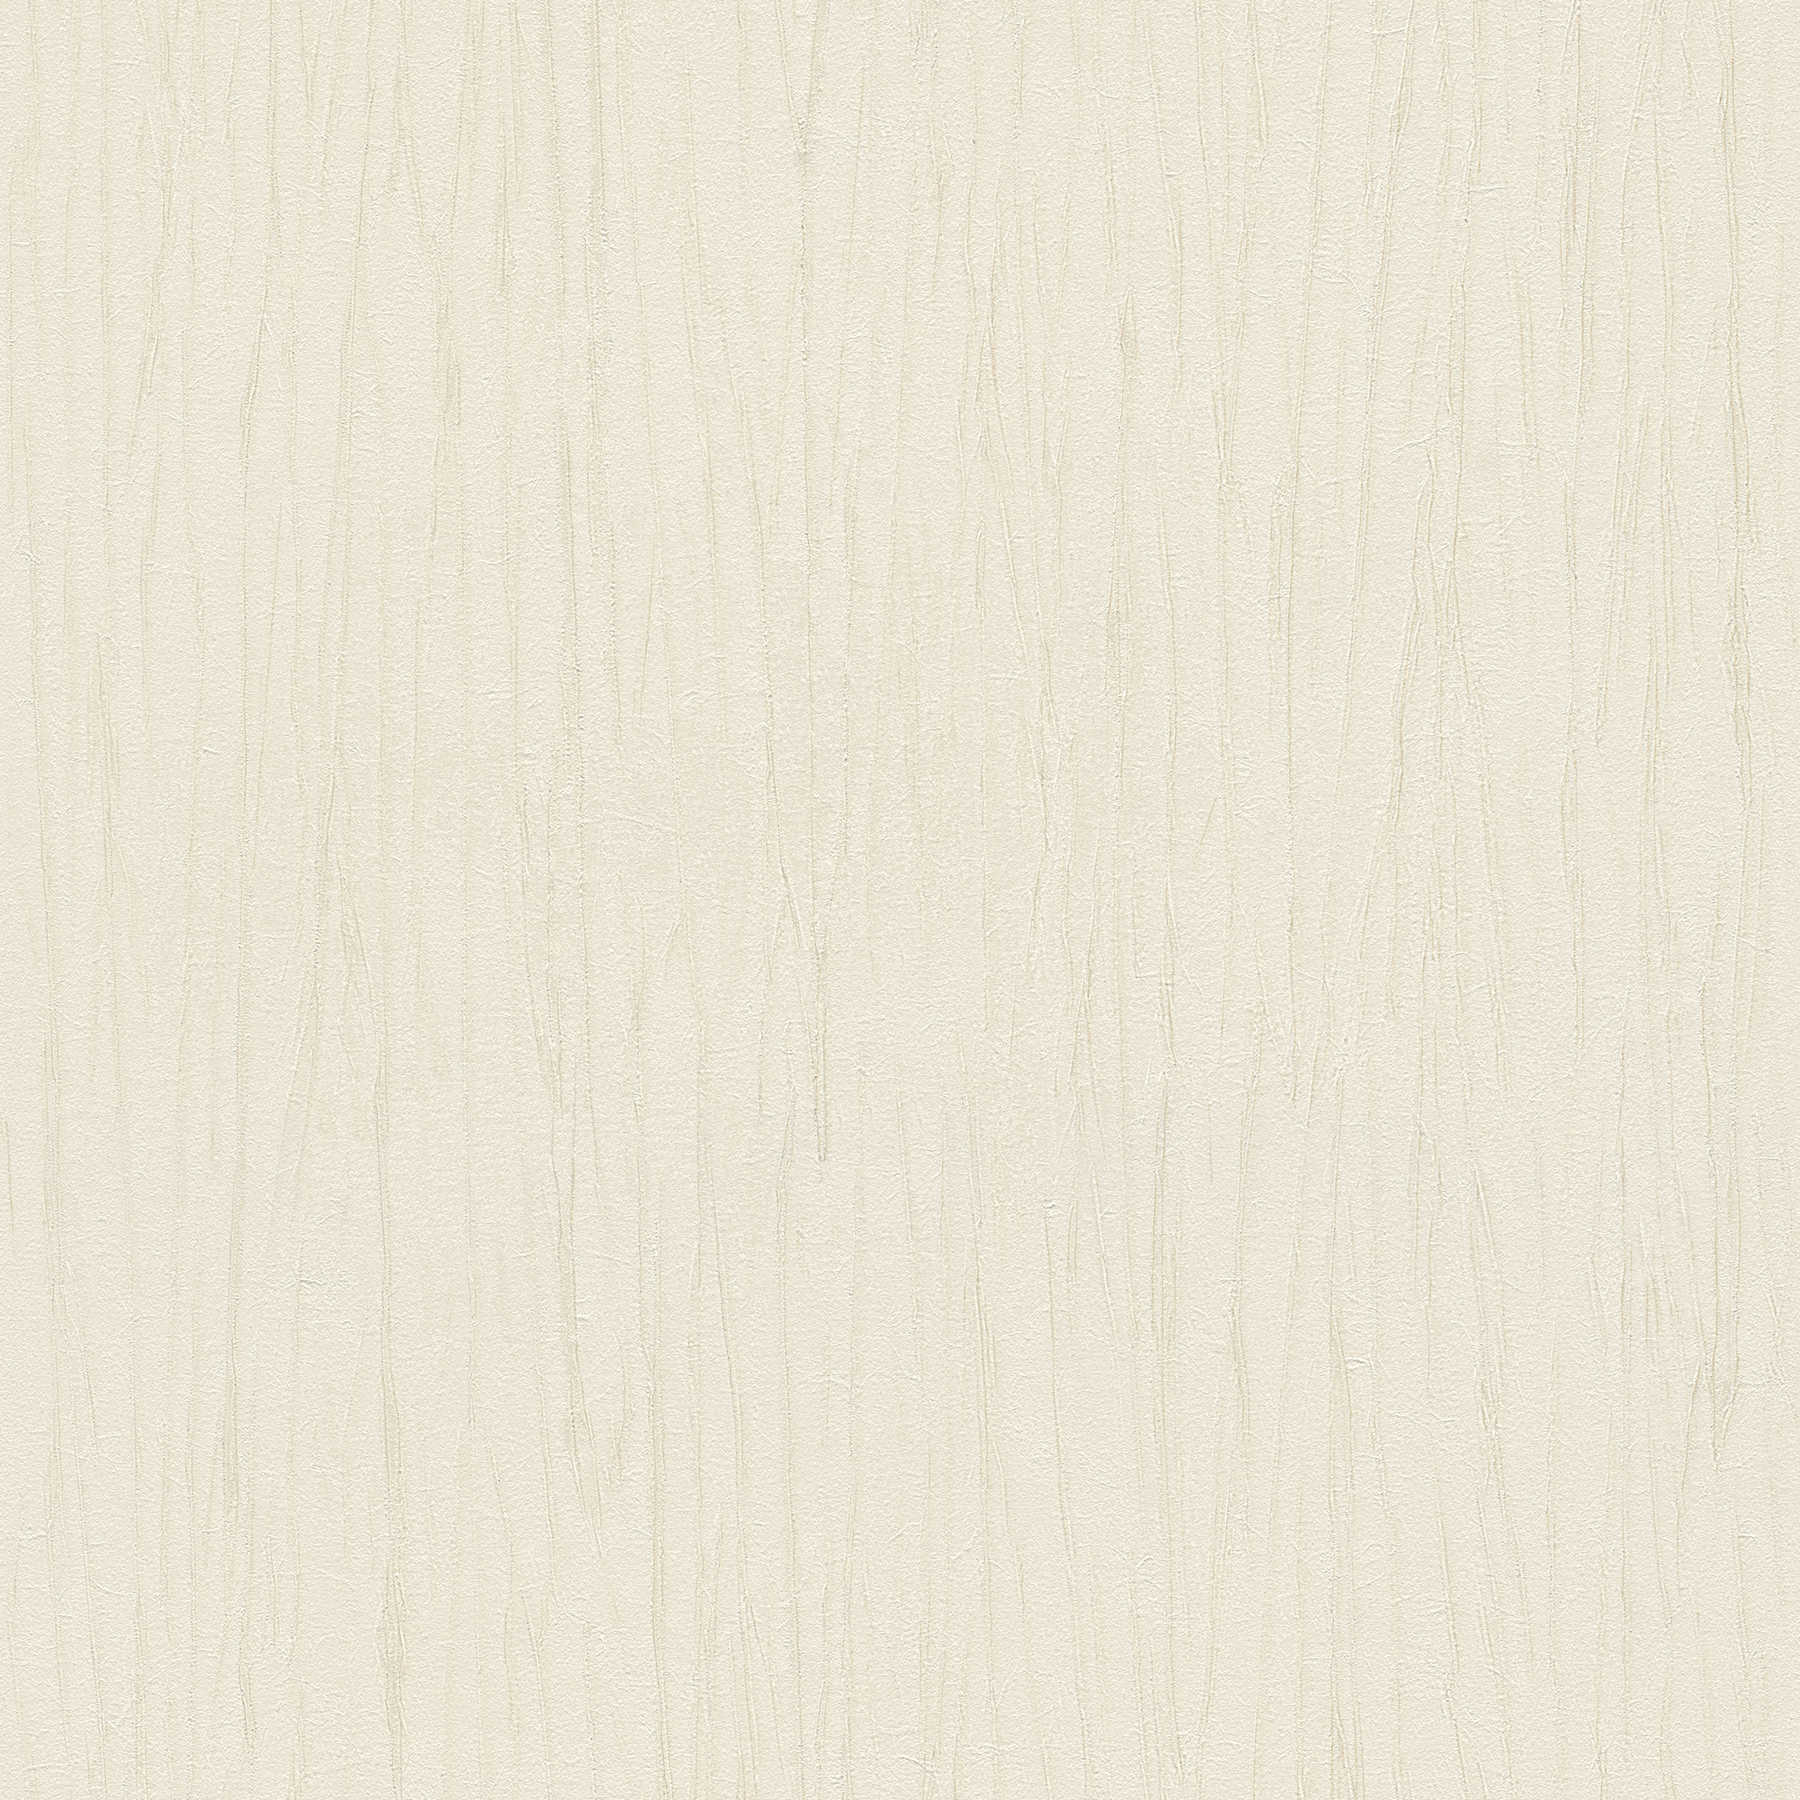 Wallpaper Crush structure & metallic effect - beige, cream
